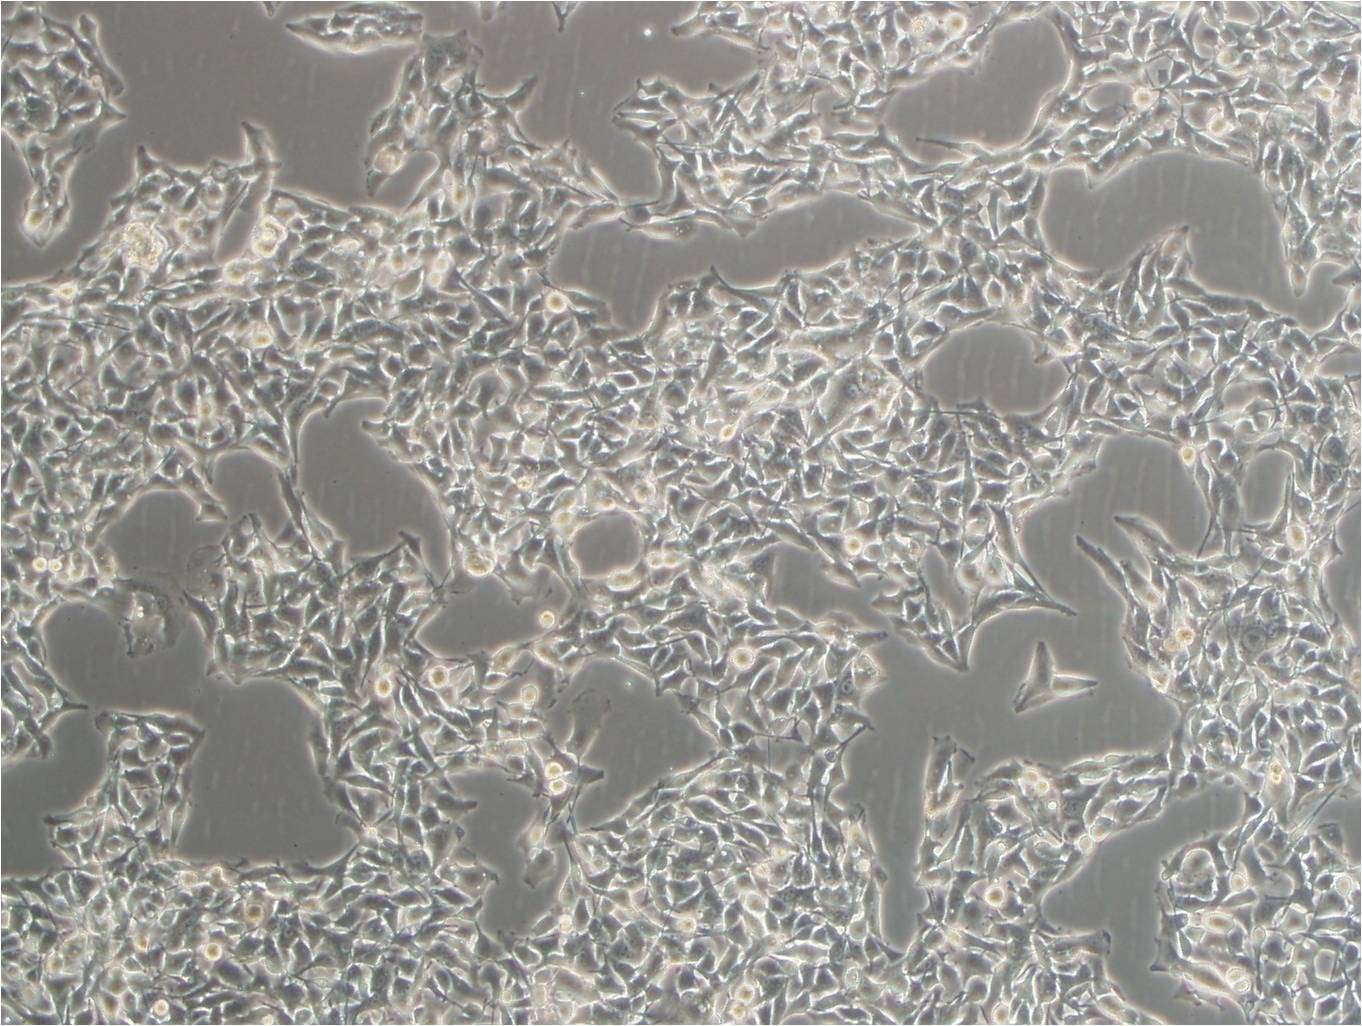 EU-4 Cells(赠送Str鉴定报告)|人急性髓系白血病细胞